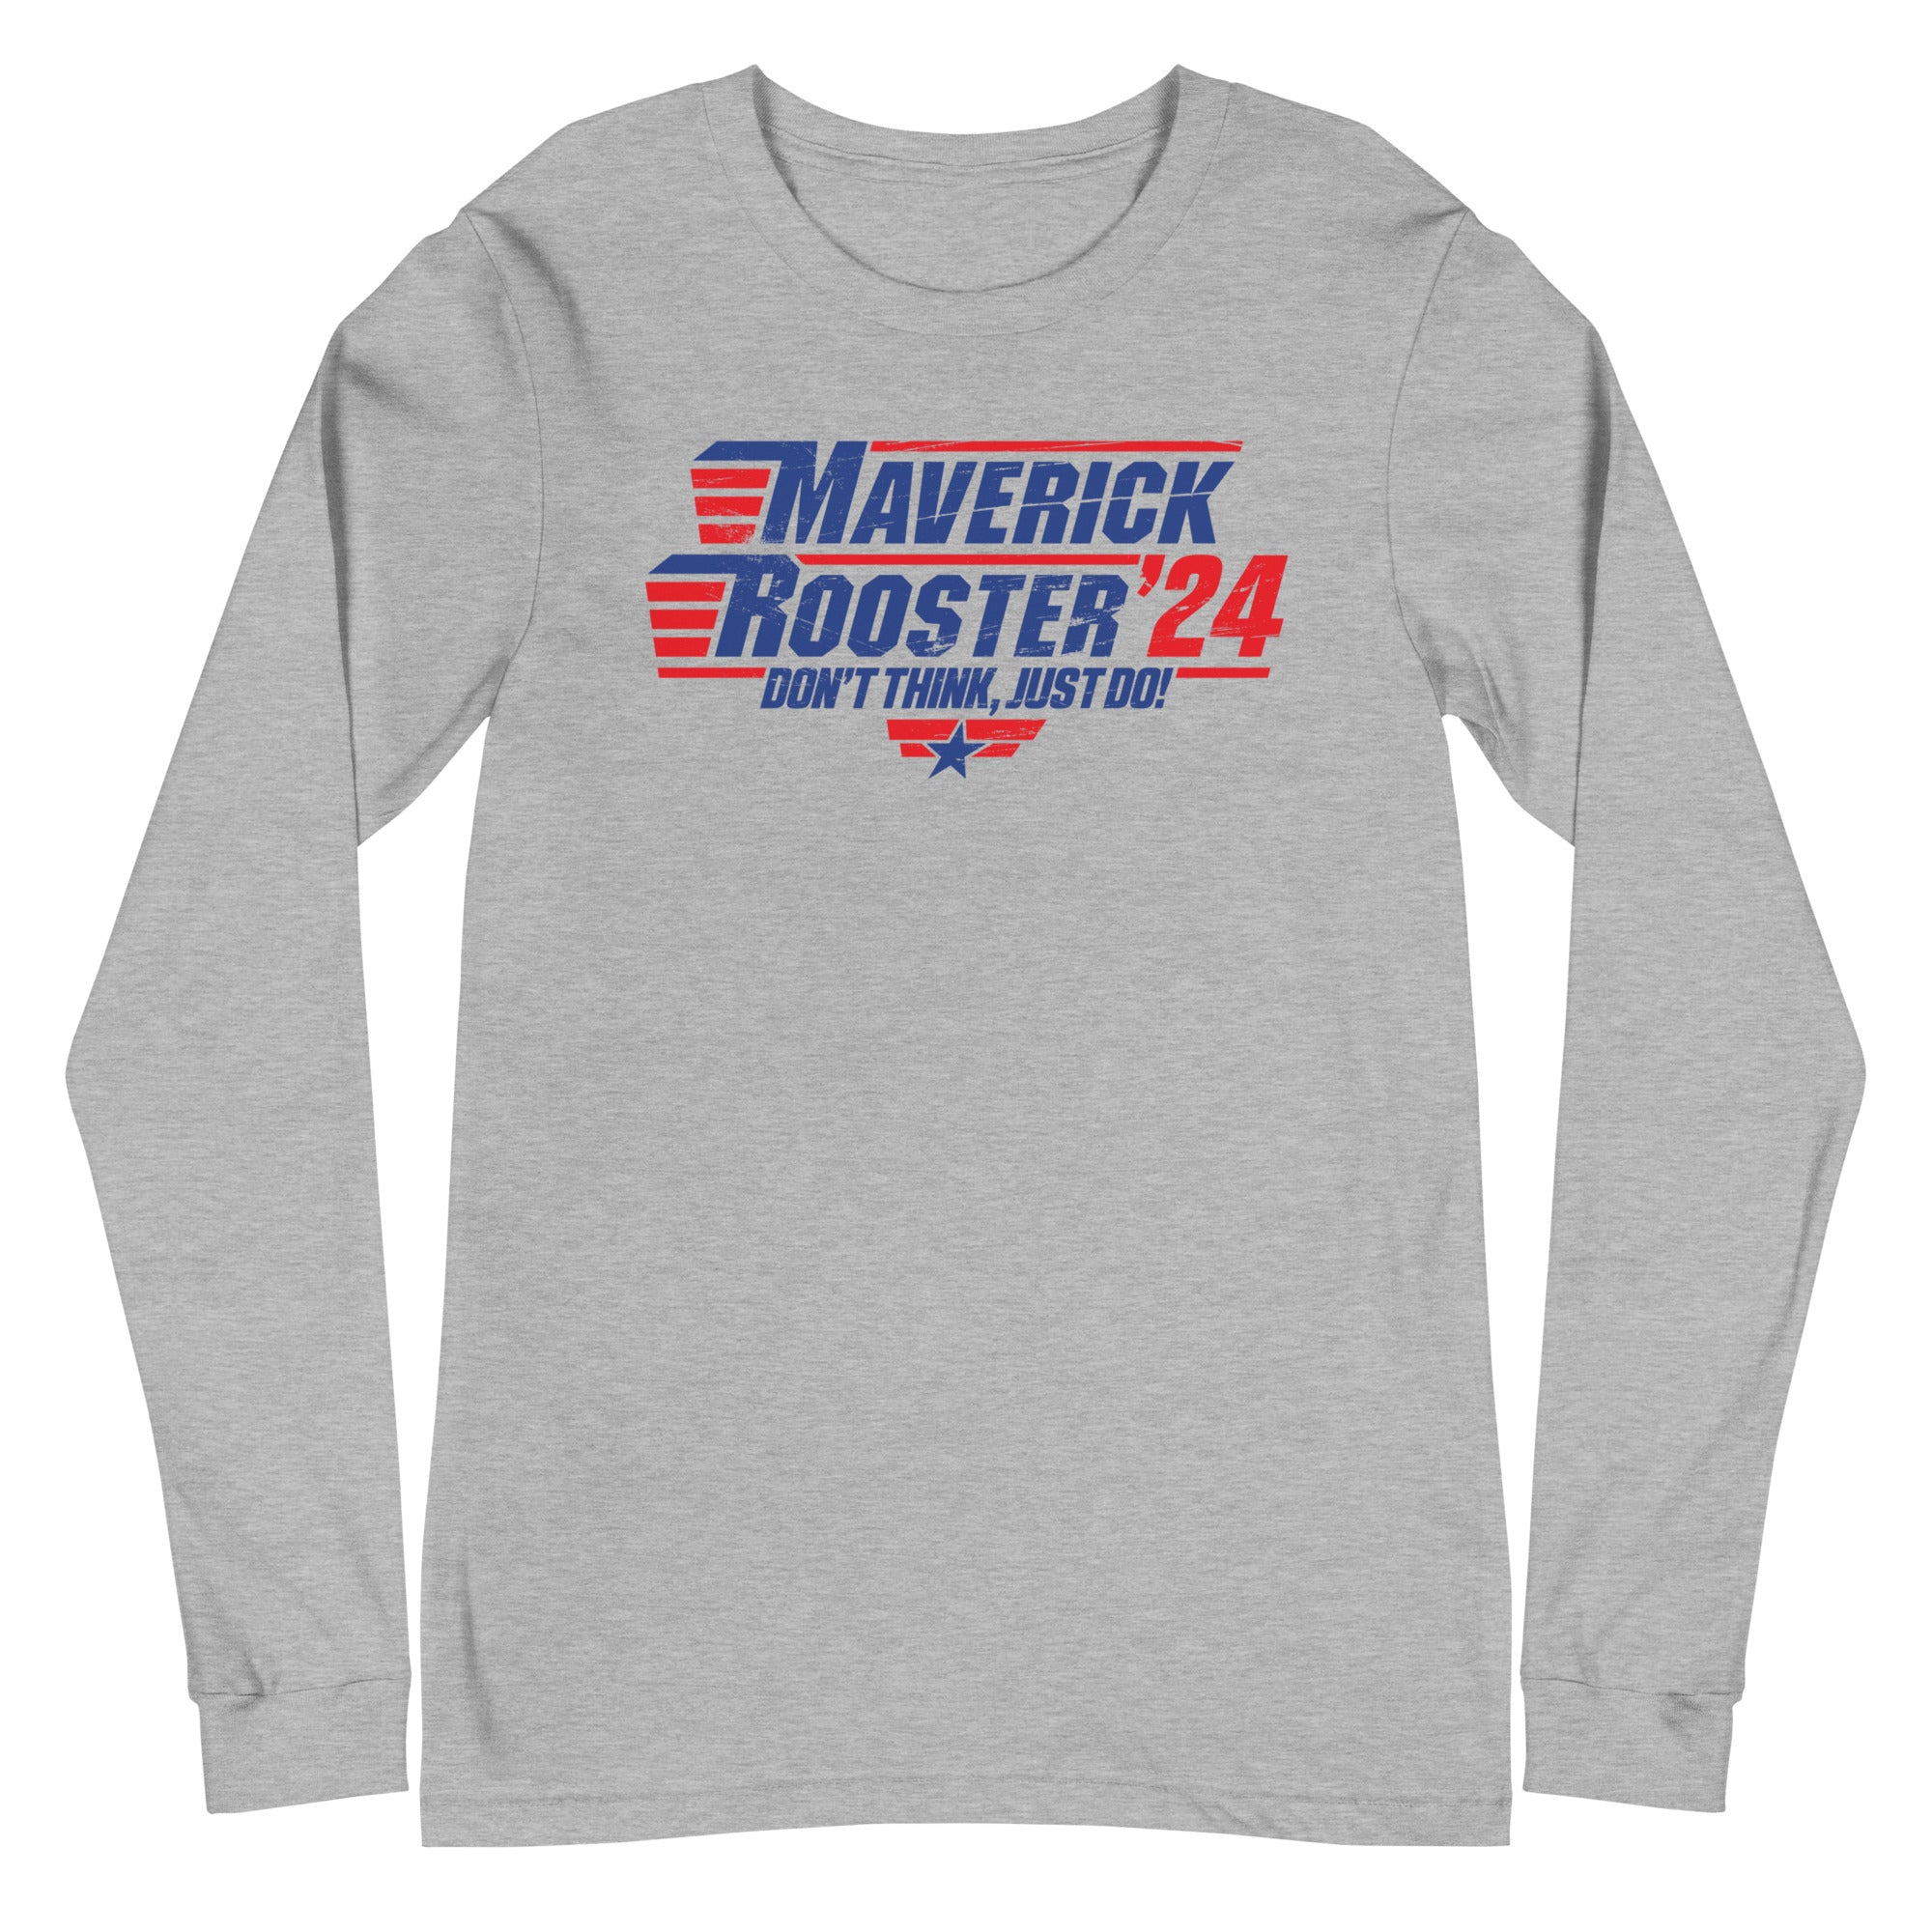 Maverick Rooster &#39;24 Long Sleeve